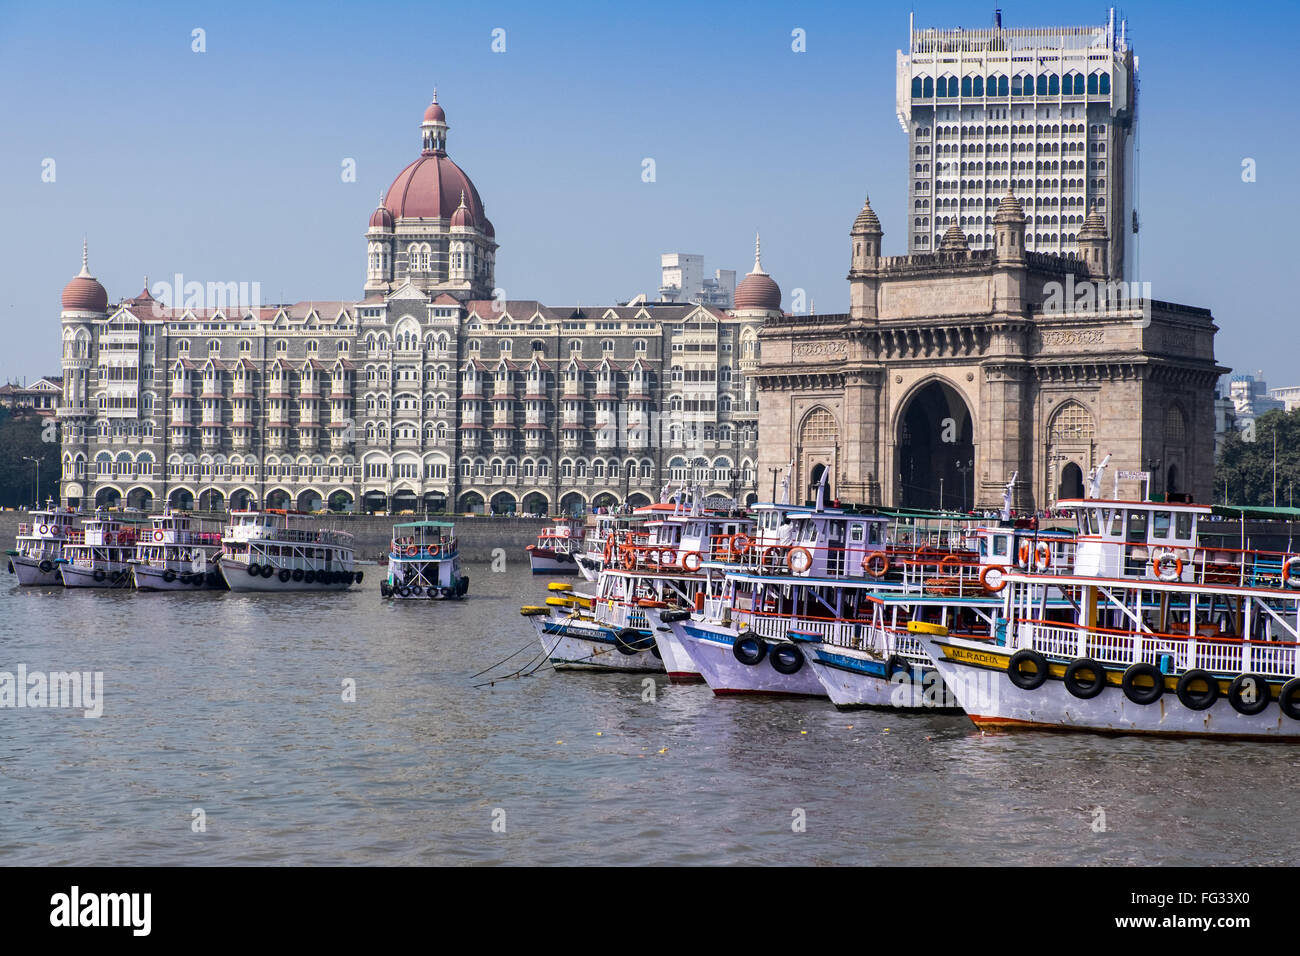 The Taj Mahal Palace Hotel and the Gateway of India, Mumbai, India Stock Photo